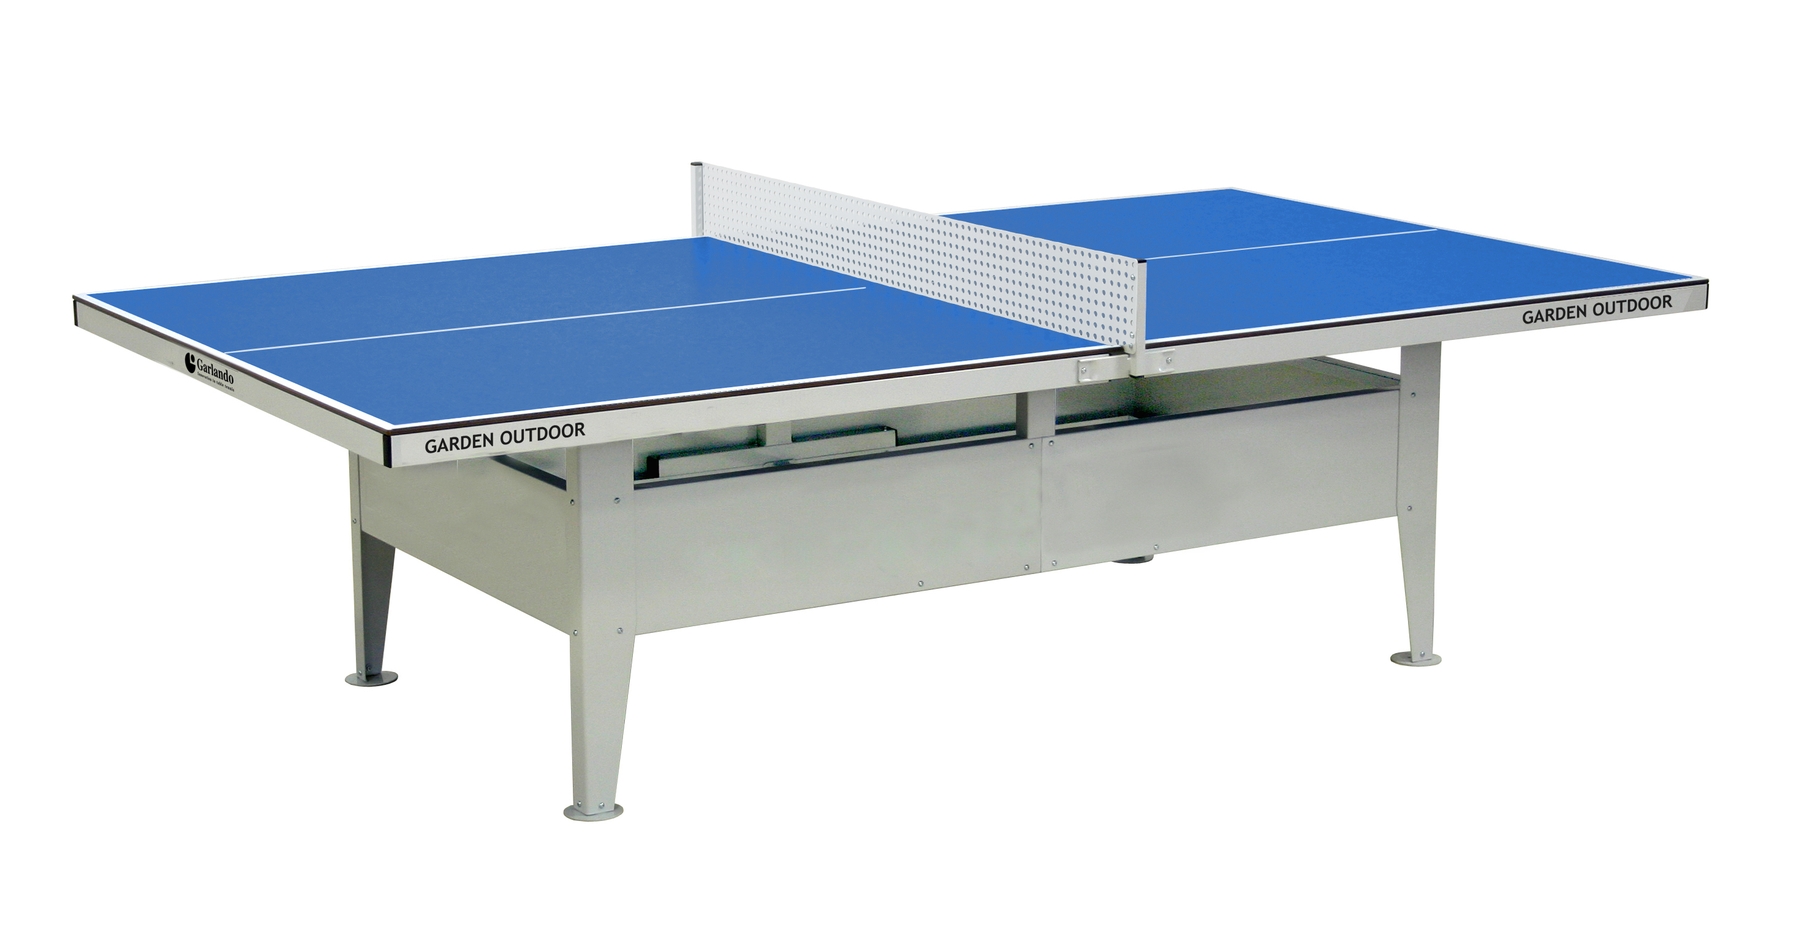 Старлайн теннисные столы. Теннисный стол Donic Outdoor. Теннисный стол Joola 2000-s. Теннисный стол "winner s400". Антивандальный теннисный стол Donic Galaxy синий.